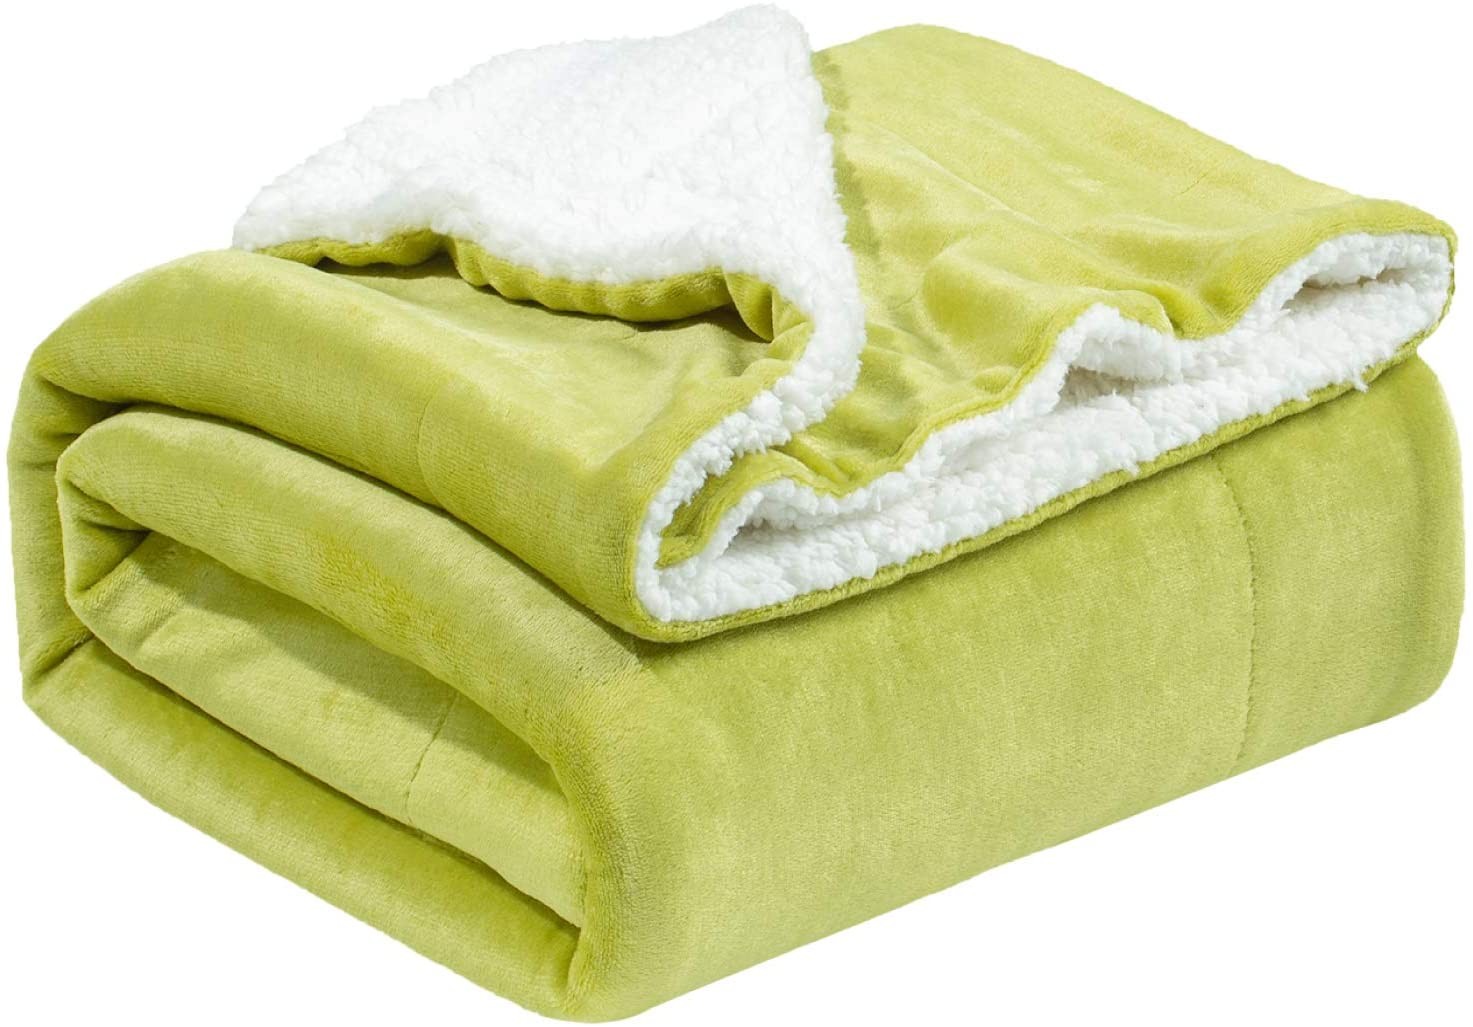 Plush Sherpa Fleece Blanket Reversible Warm Cozy Microfiber Soft Plush Throw Blanket